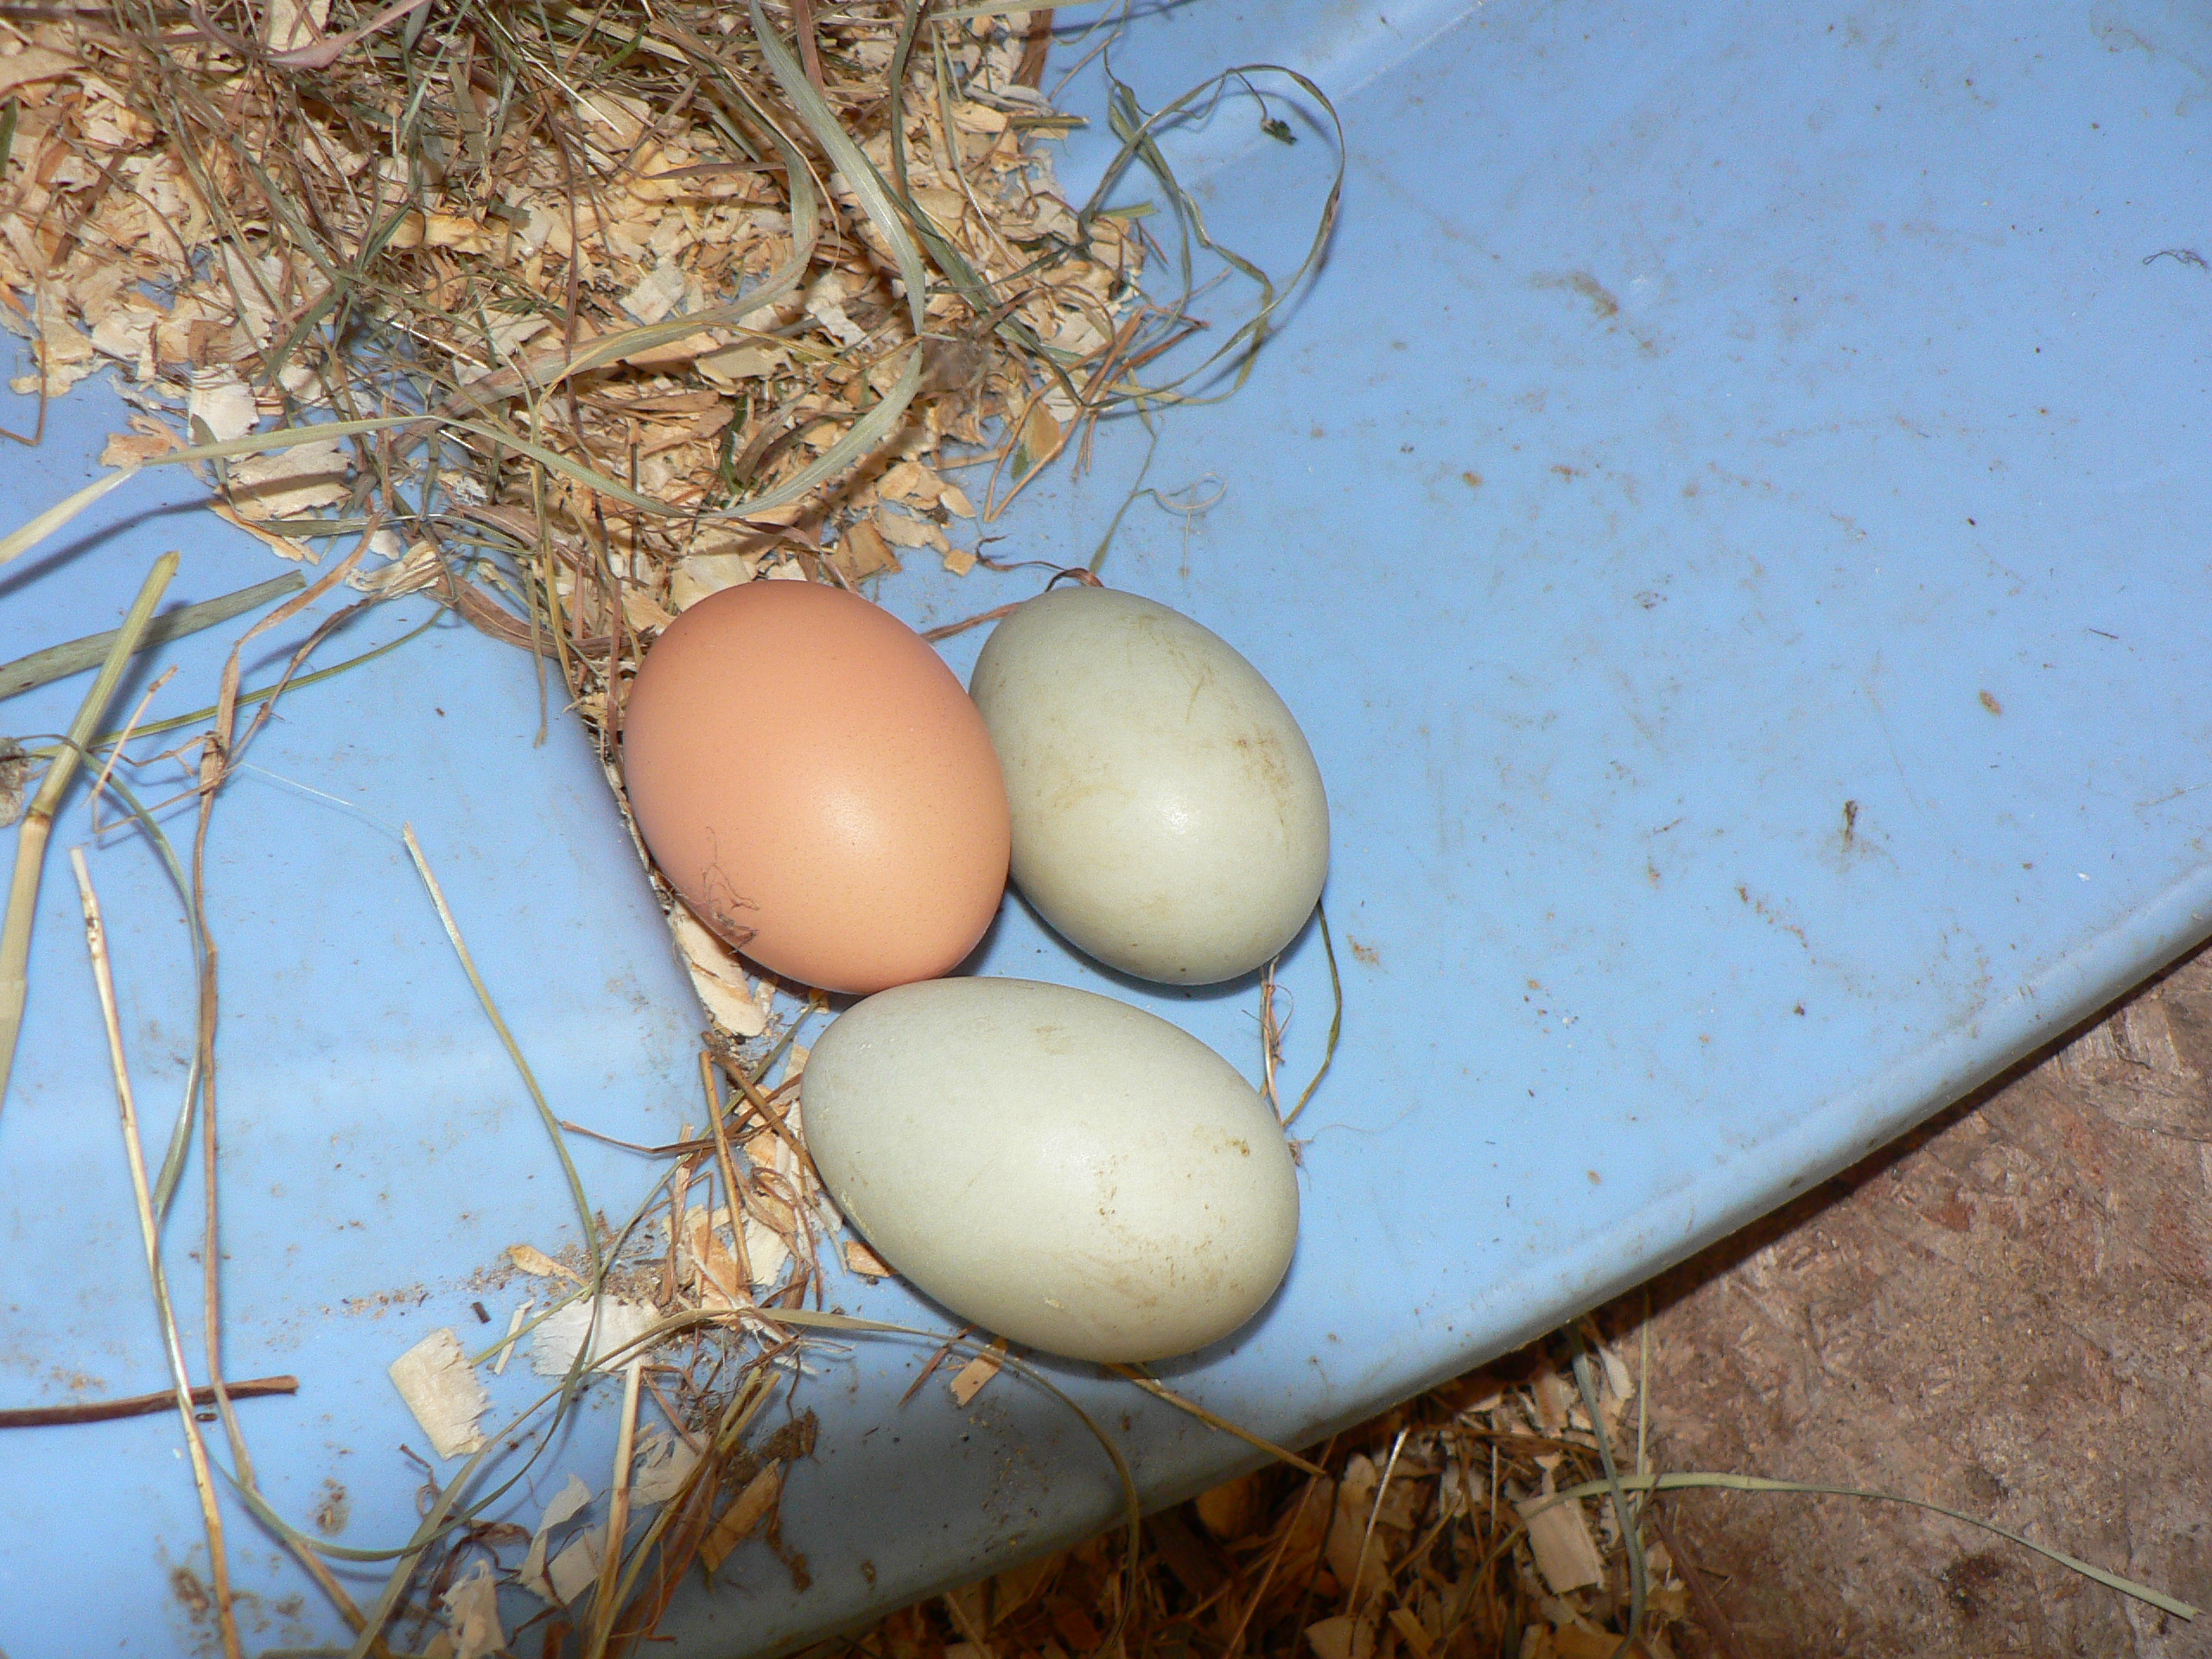 RIR egg with 2 duck eggs